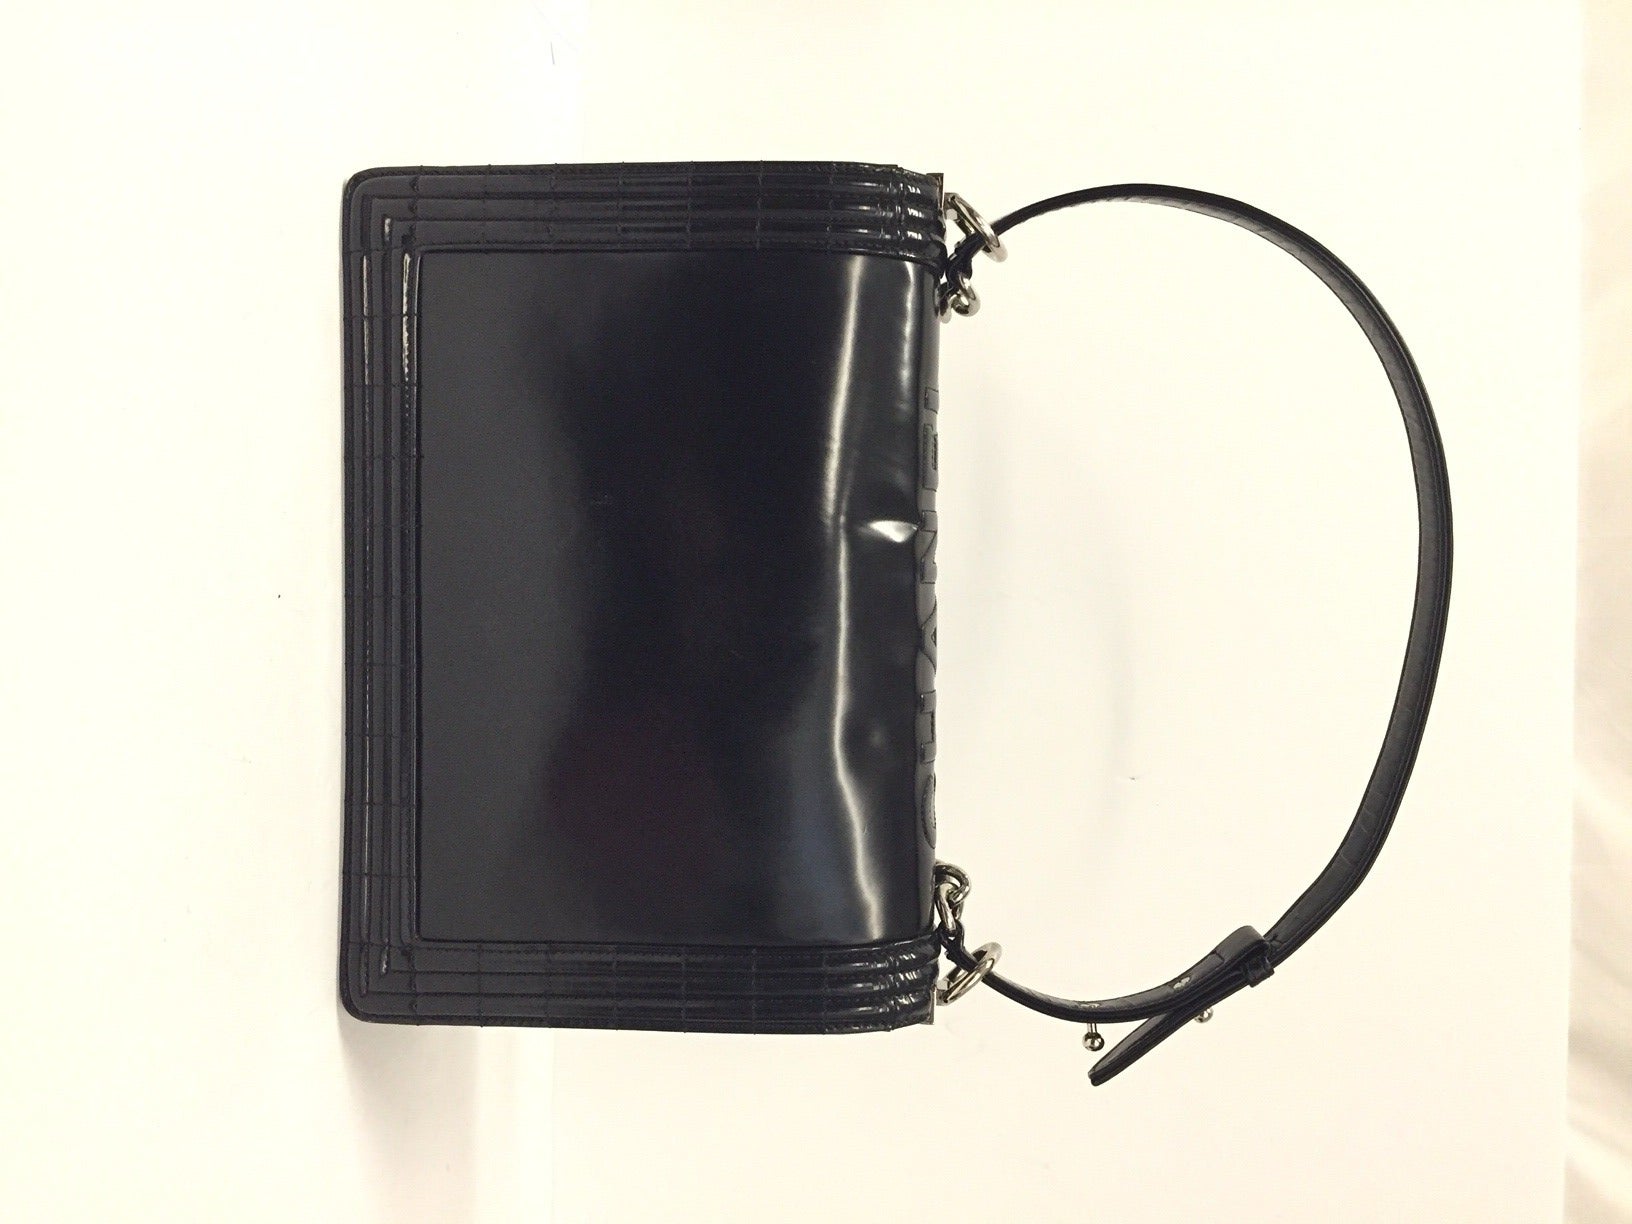 Chanel Le Boy Large Black Patent Leather For Sale 1